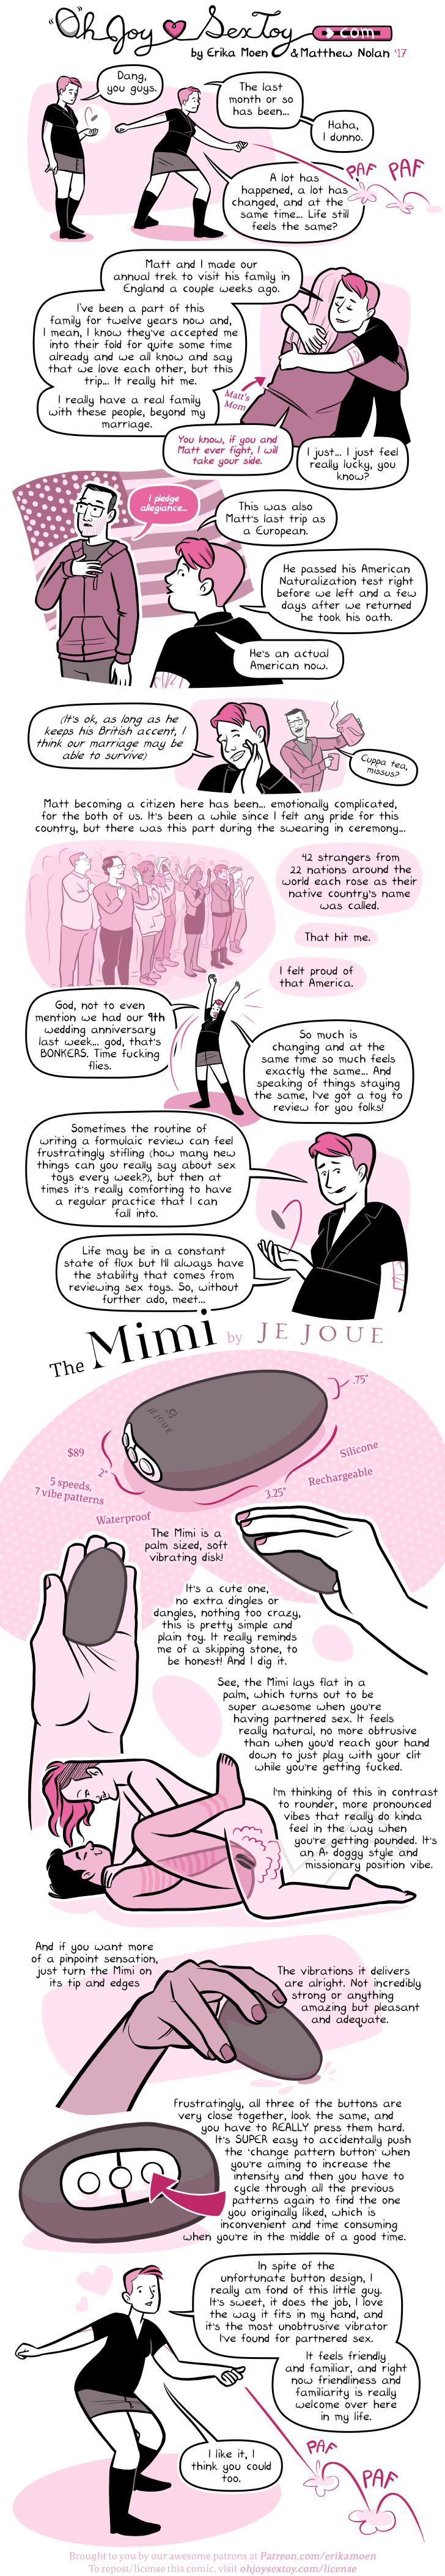 The Mimi Soft